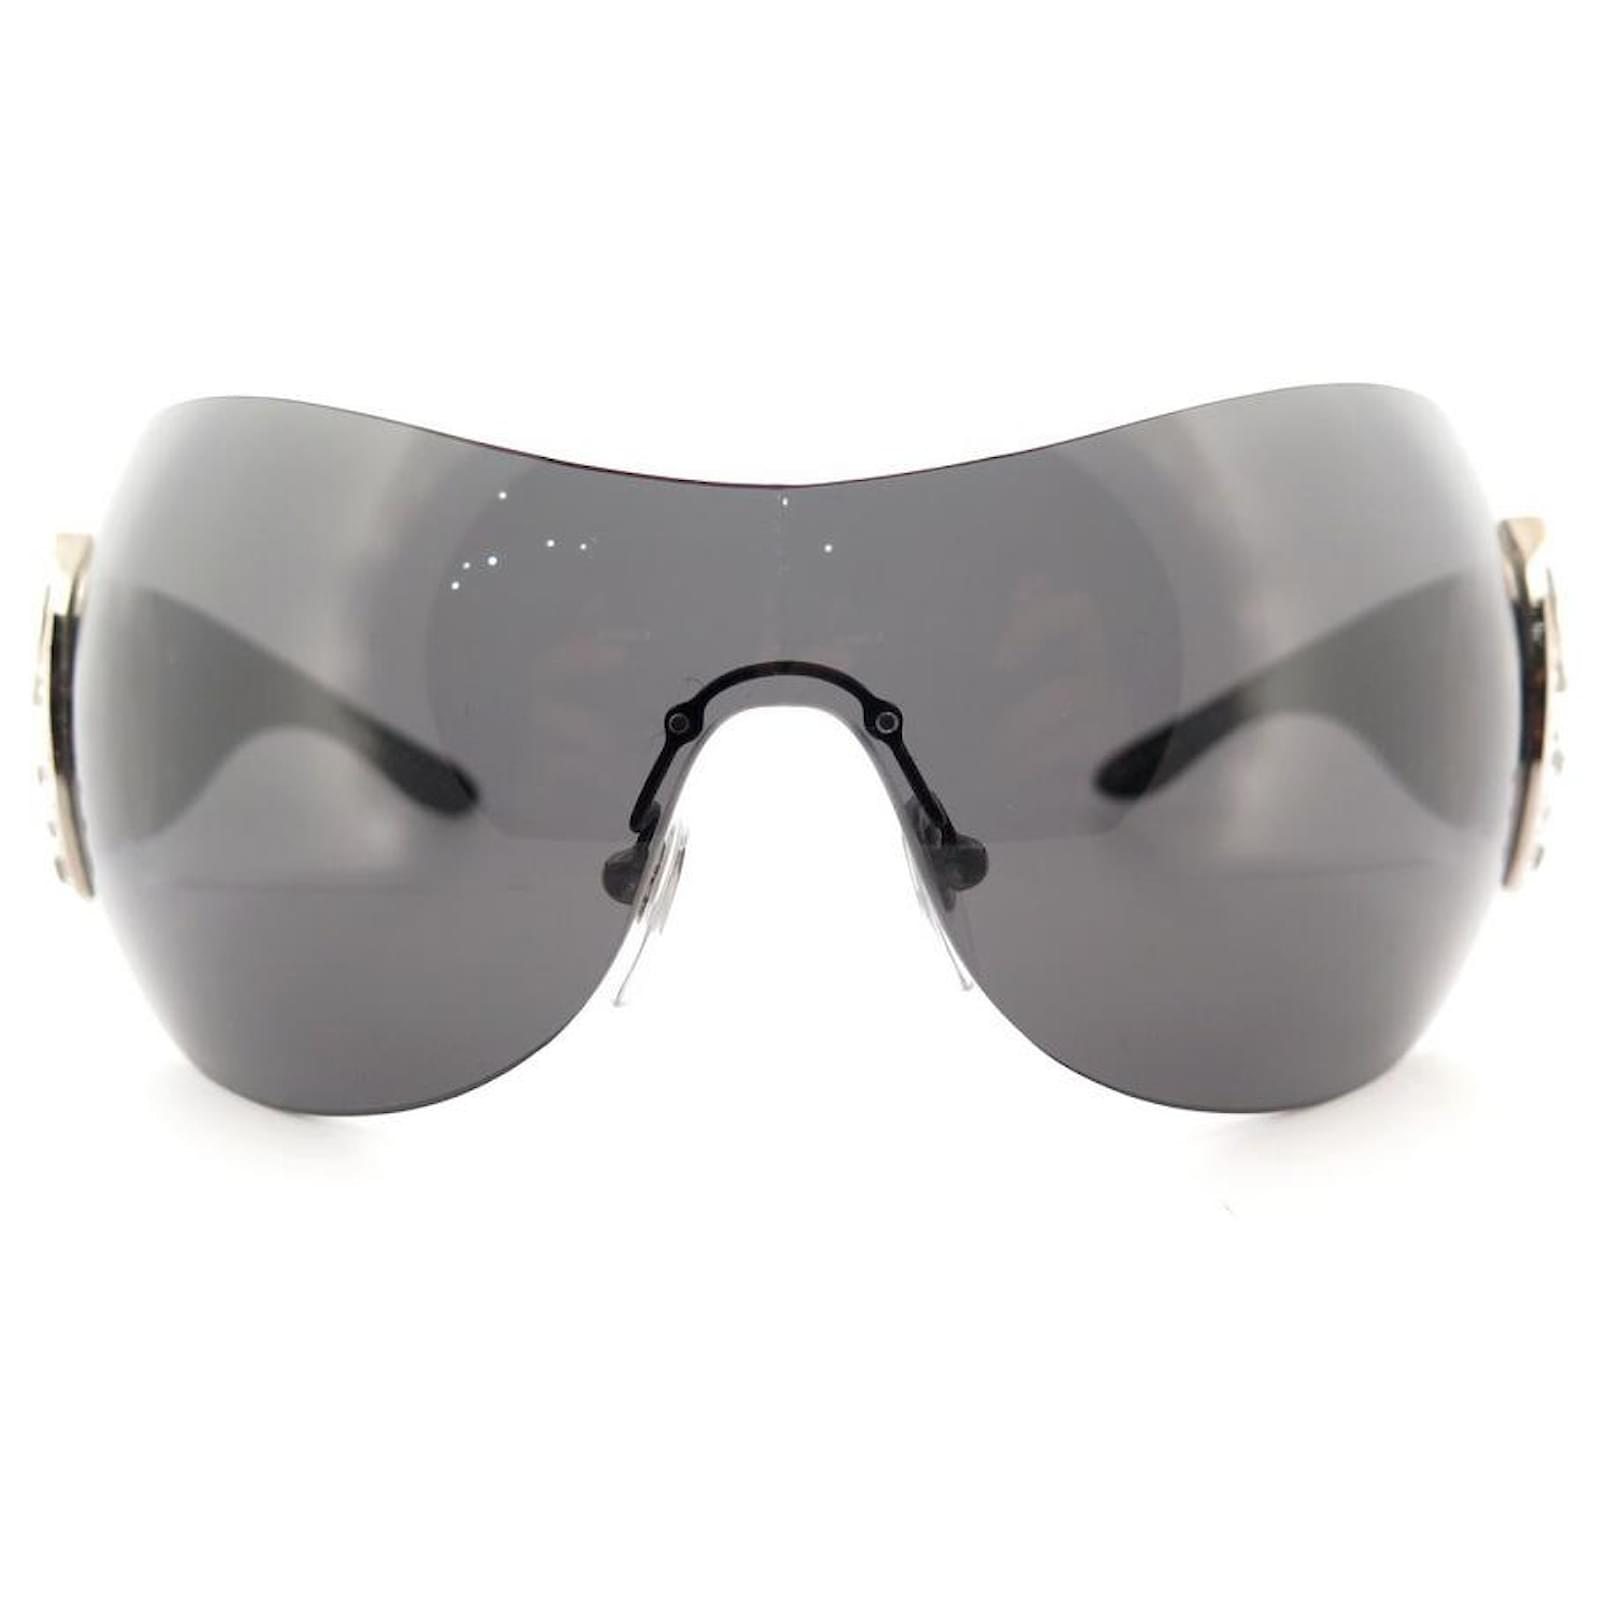 https://cdn1.jolicloset.com/imgr/full/2023/09/999752-1/schwarz-kunststoff-neue-bulgari-strass-sonnenbrille-6017-b-maske-masken-sonnenbrillen-etui.jpg